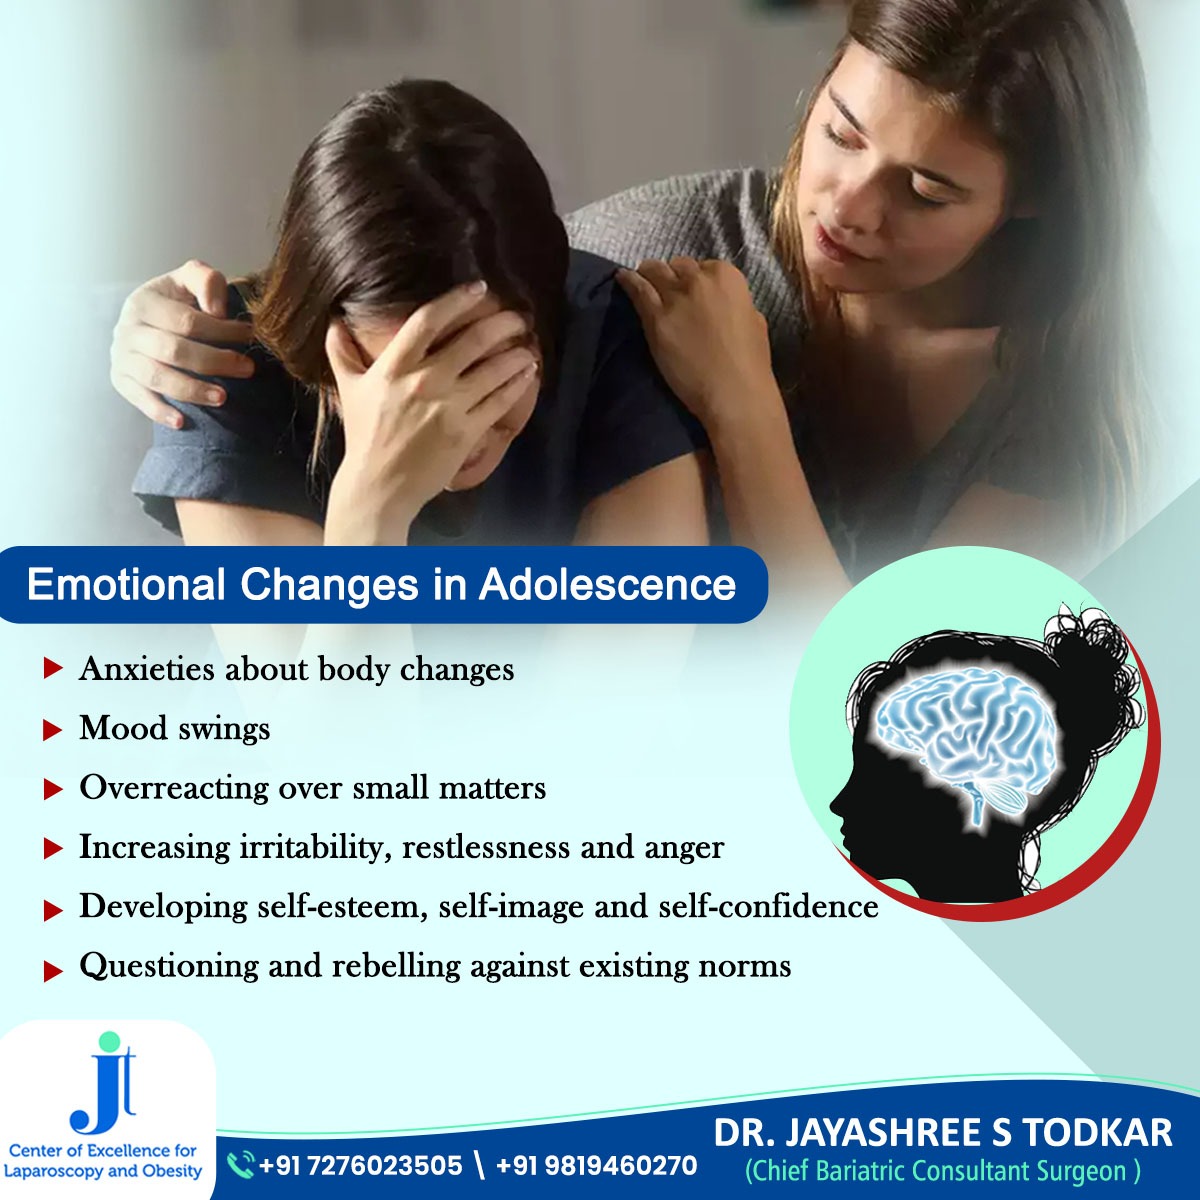 Emotional Changes in Adolescence

.
.
.
.
.
#EmotionalChanges #Adolescence #BodyChanges #MoodSwings #Overreacting #Irritability #Restlessness #Anger #SelfEsteem #SelfImage #SelfConfidence #QuestioningNorms #Rebellion #DrJayashreeTodkar